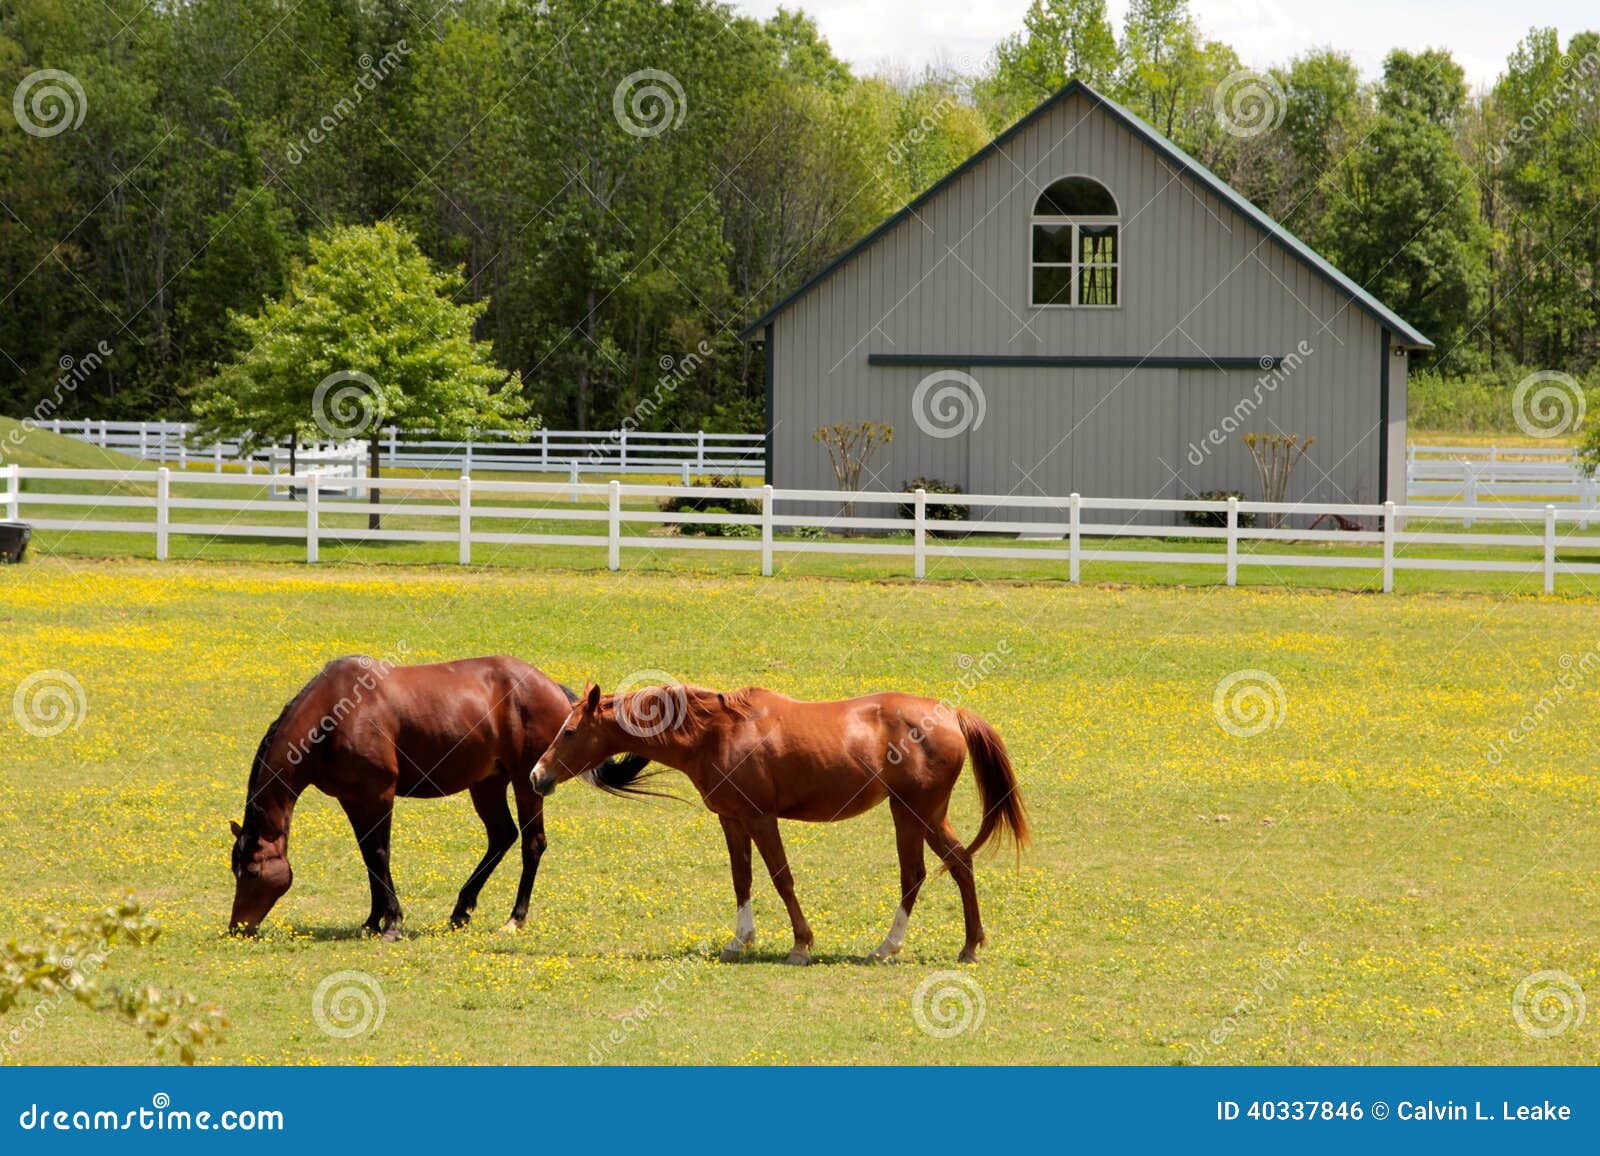 beautifully healthy horses grazing in an open field